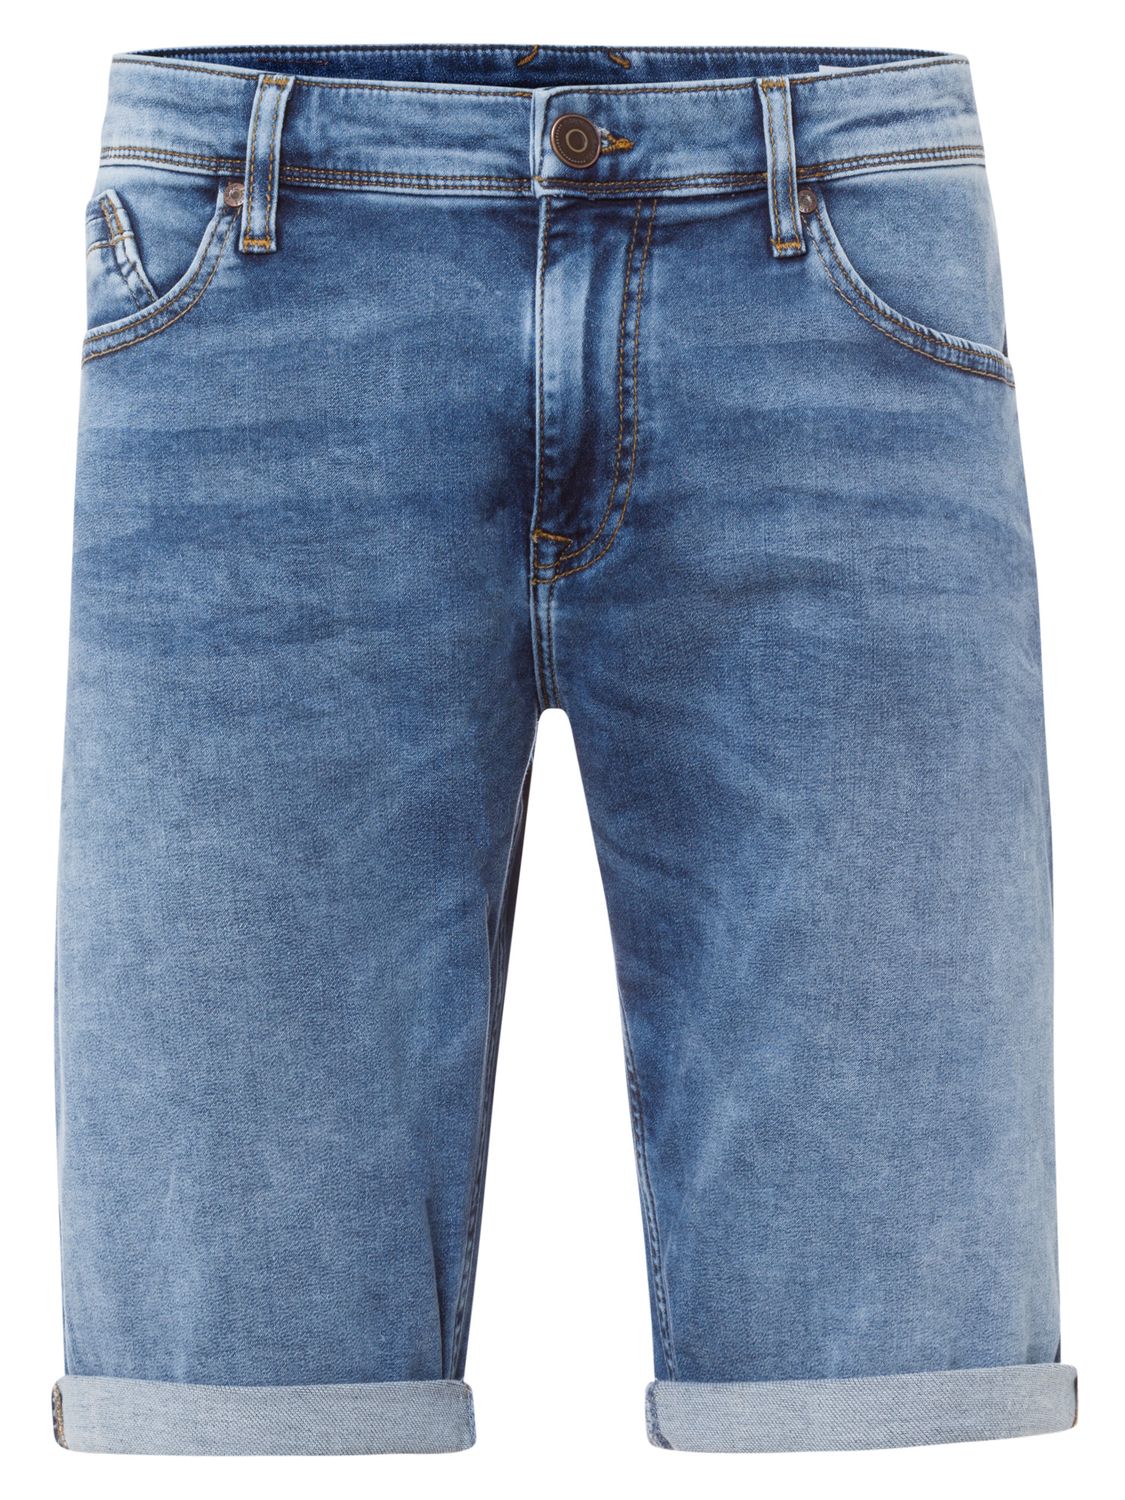 Тканевые шорты Cross Jeans LEOM regular/straight, серый